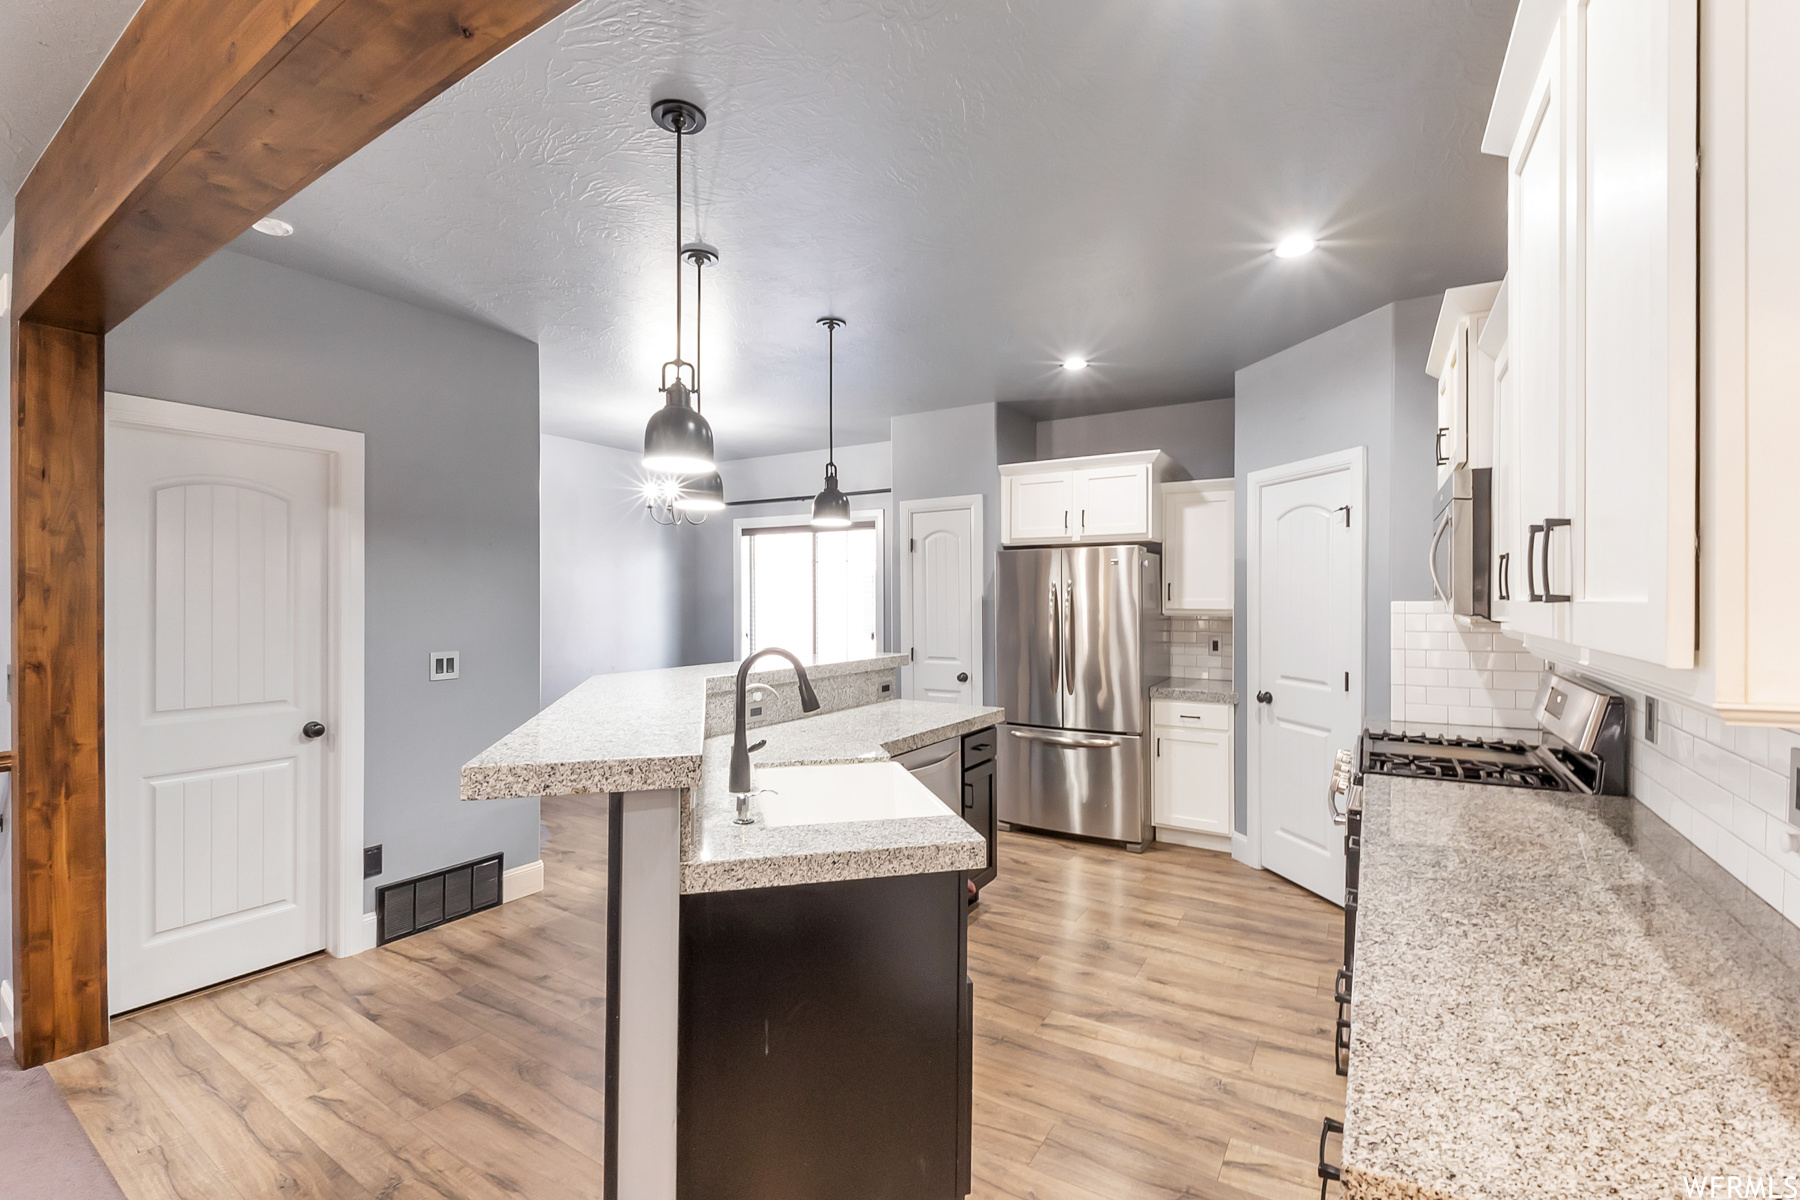 Kitchen with light hardwood flooring, light granite countertops, hanging light fixtures, backsplash, and stainless steel appliances